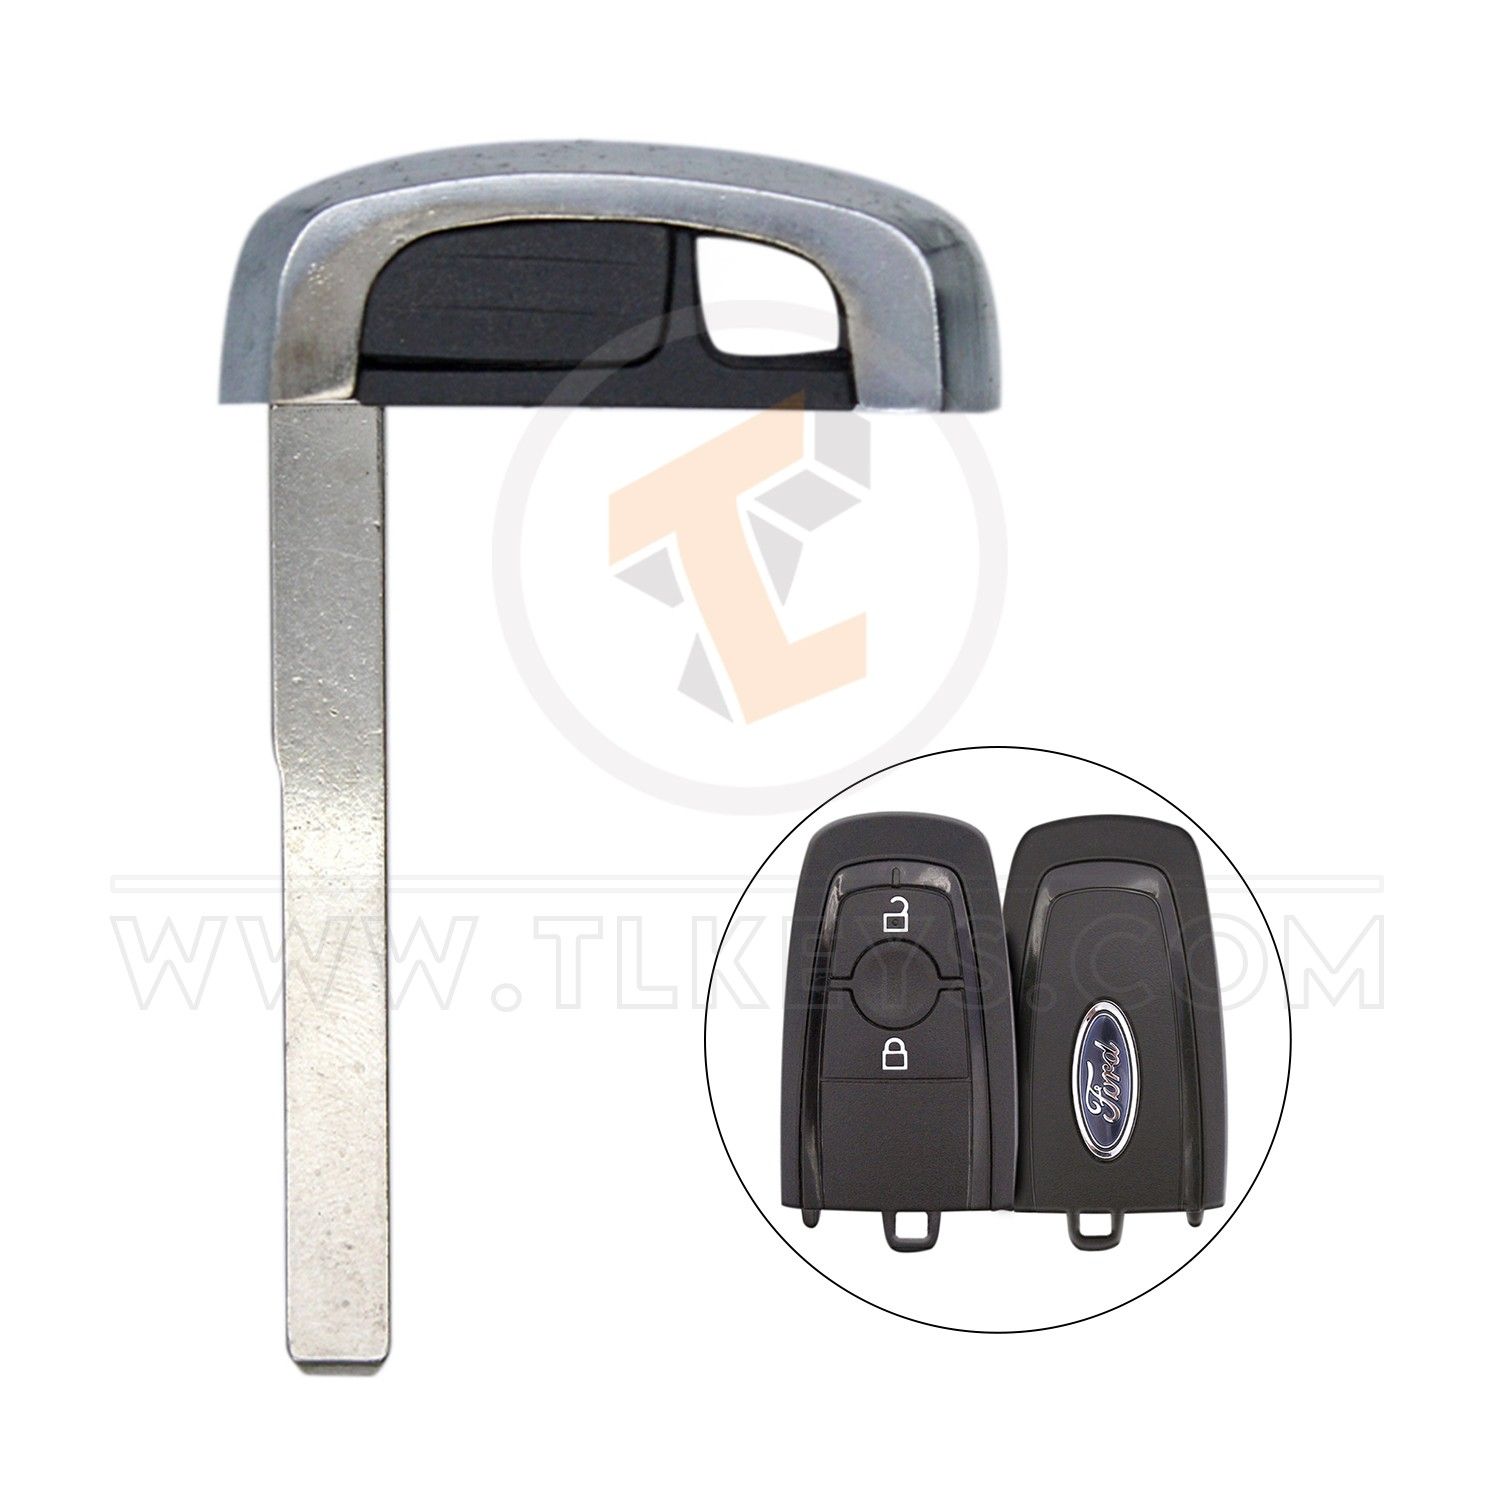 Ford Fushion Emergency Key For Smart Key Remote Emergency Keys